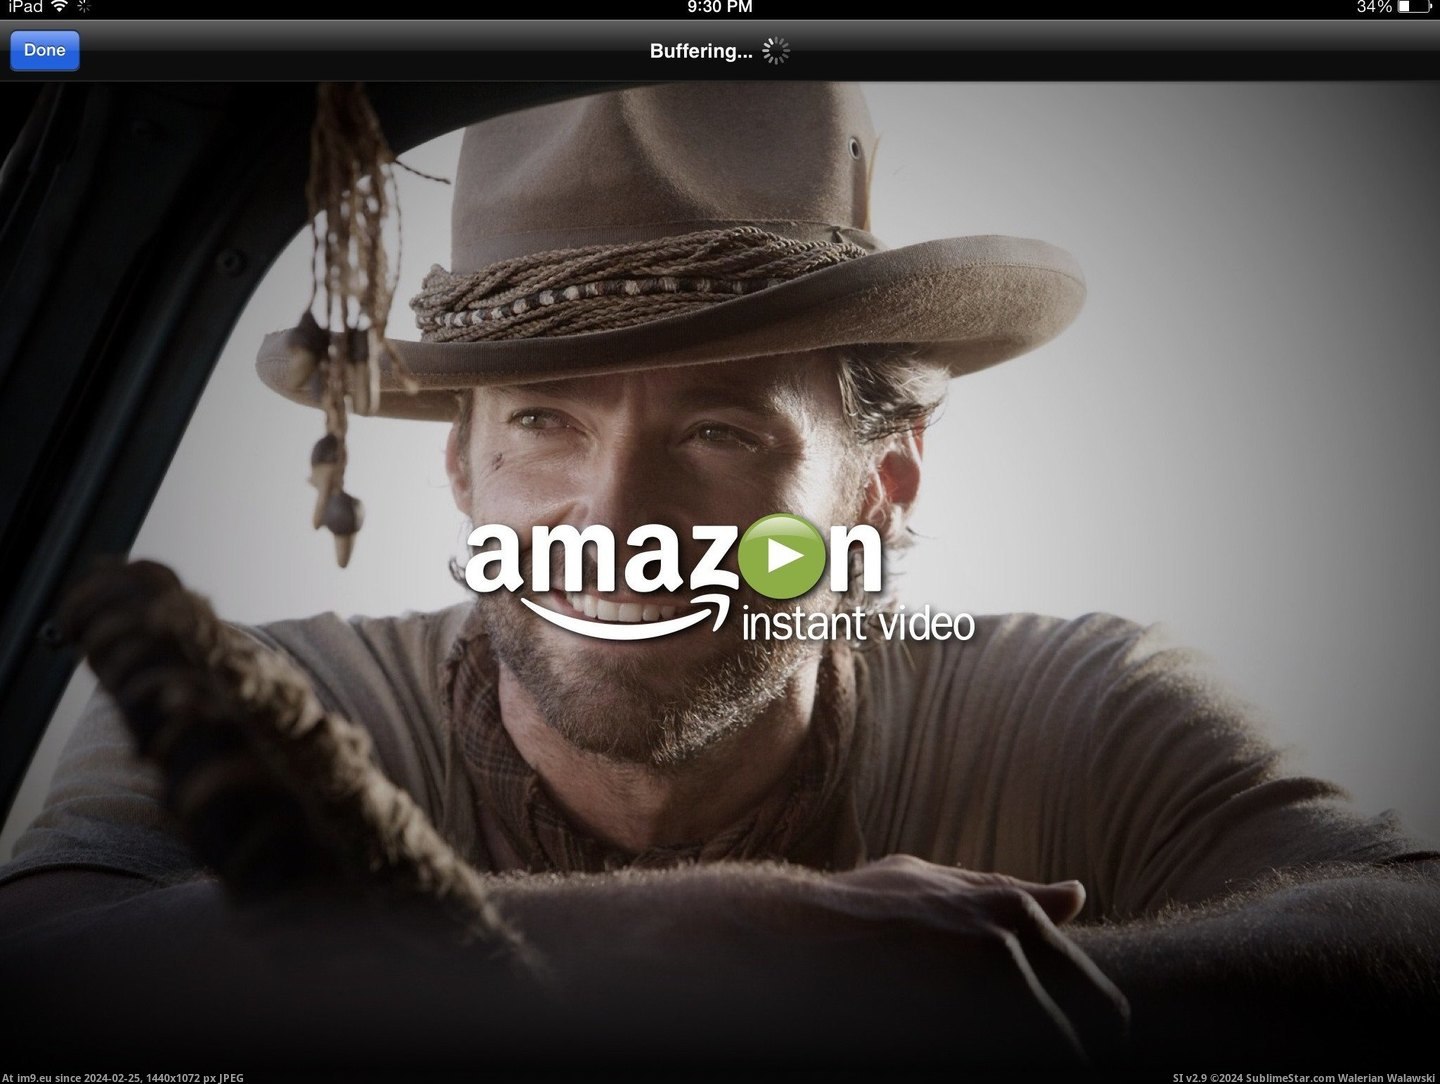 #Smile #Amazon #Jackman #Overlapped #Hugh #Loading [Mildlyinteresting] The Amazon 'smile' overlapped with Hugh Jackman's smile when loading Pic. (Изображение из альбом My r/MILDLYINTERESTING favs))